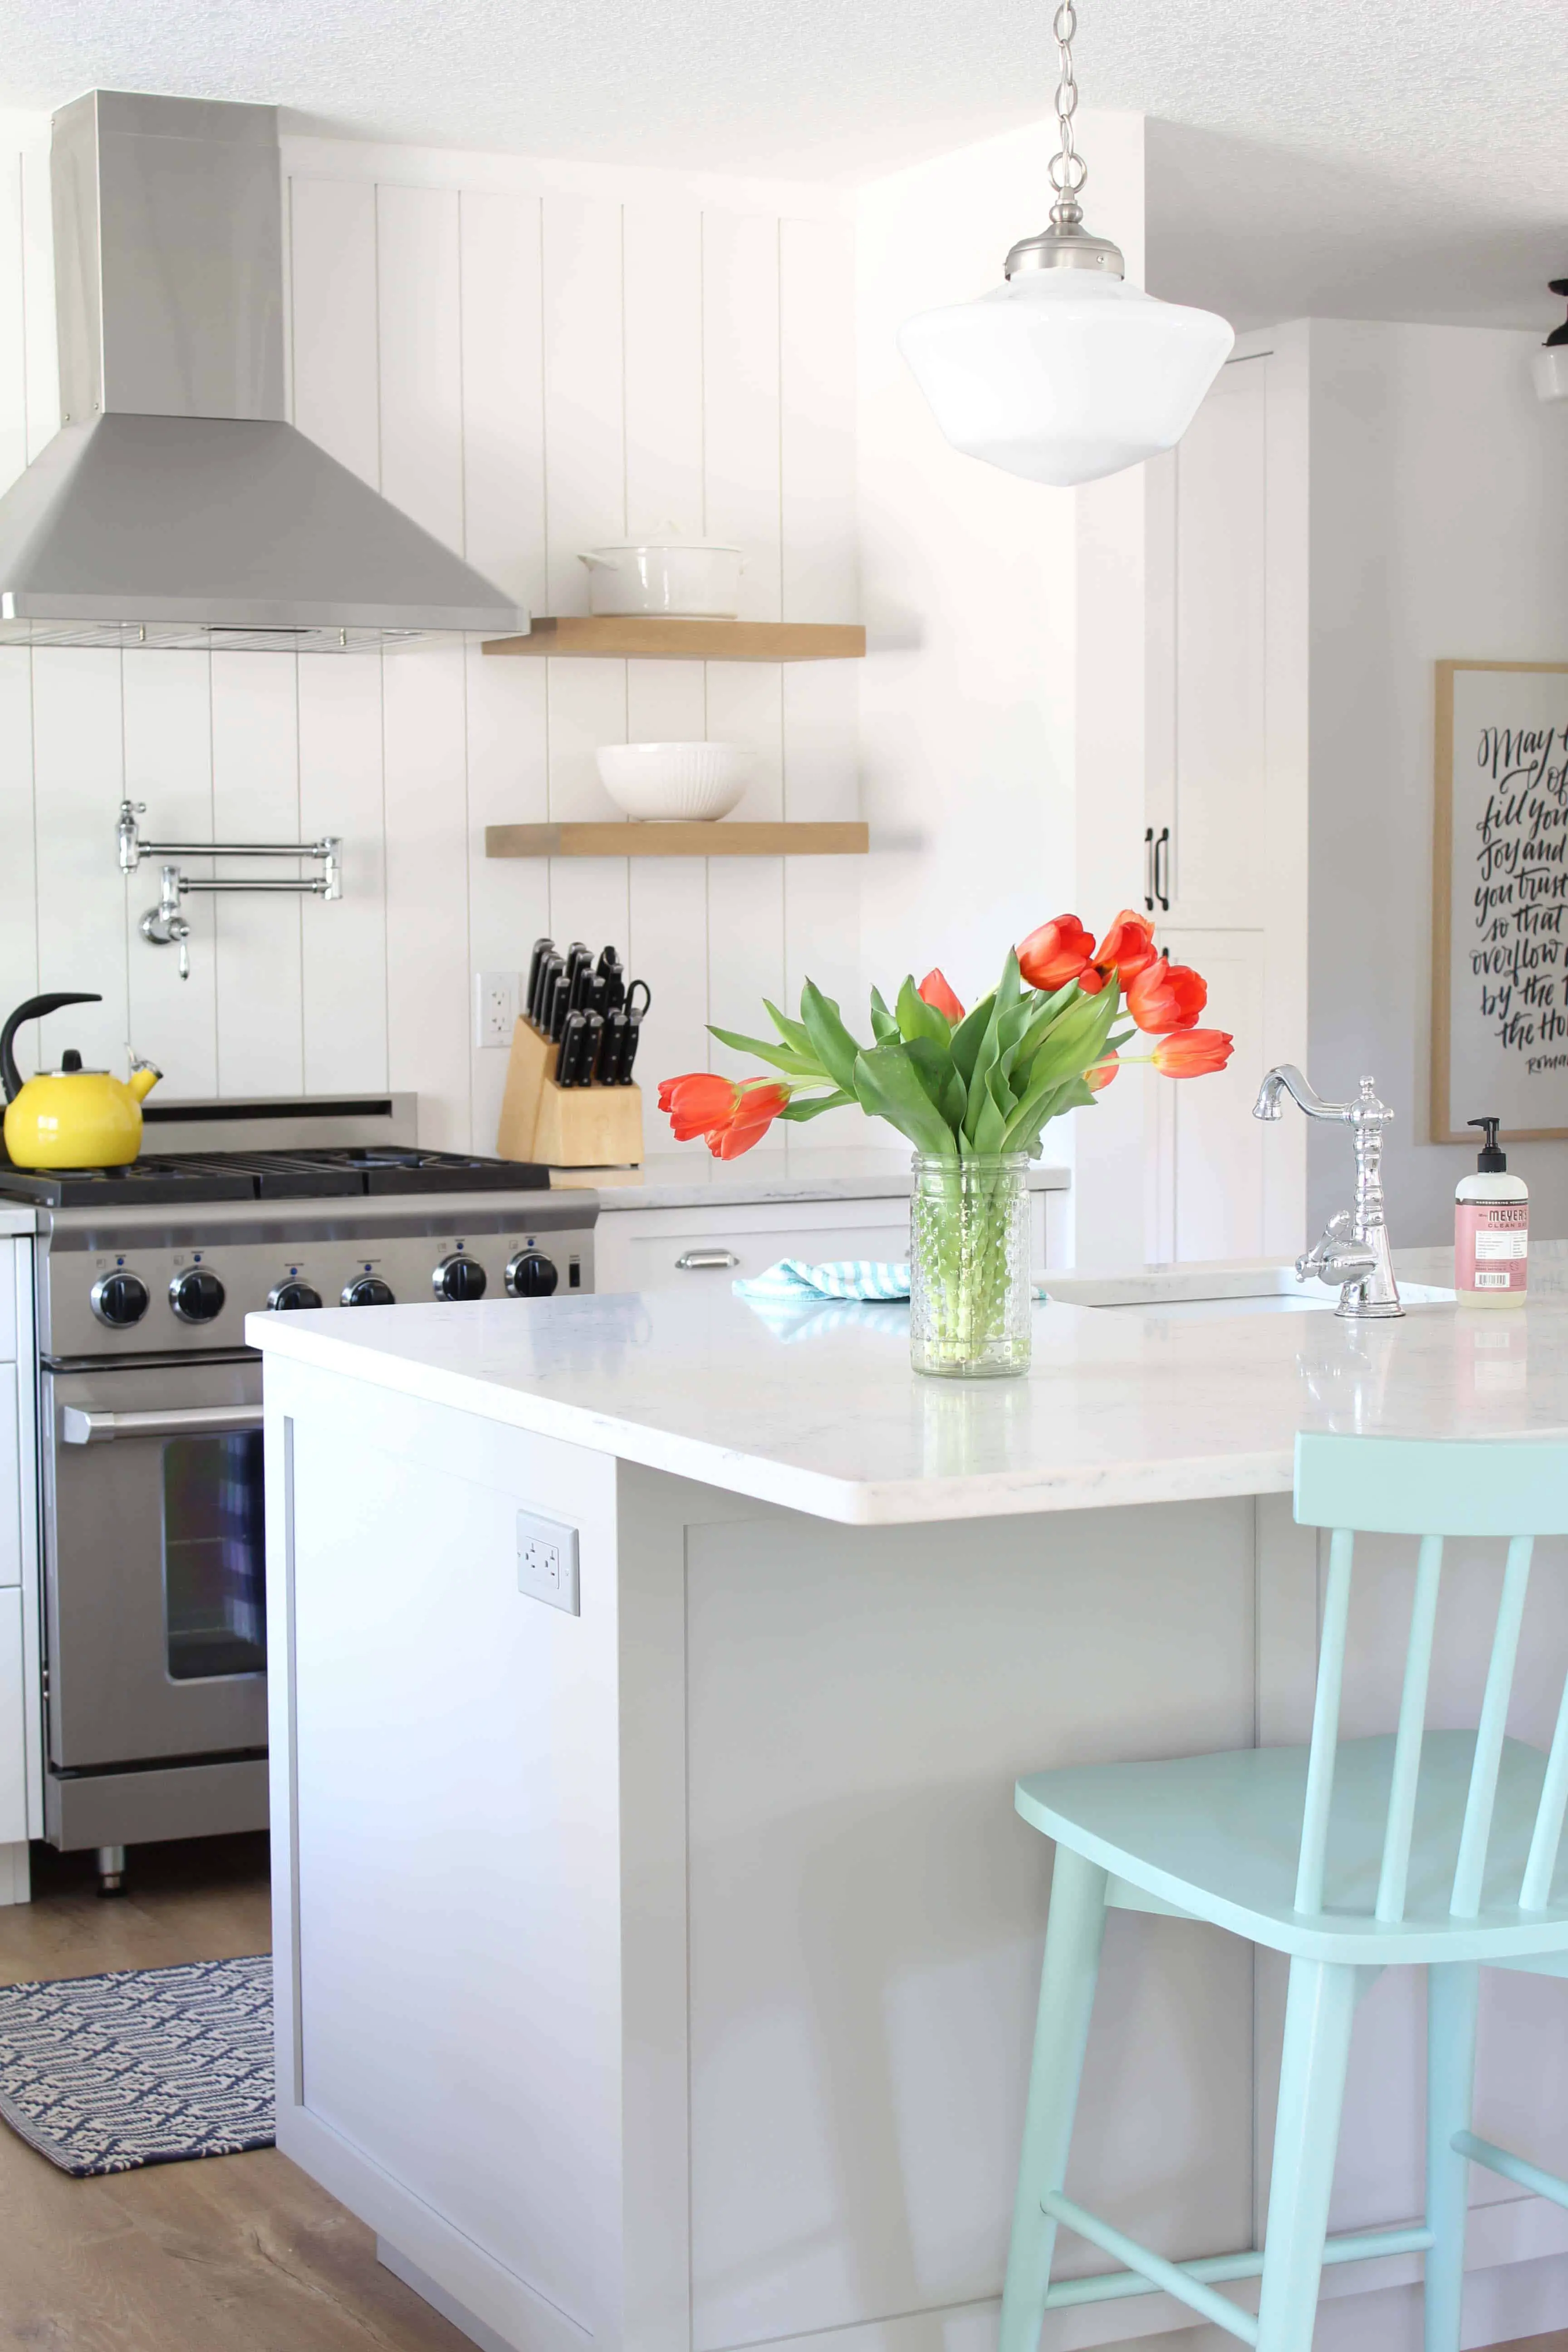 modern farmhouse kitchen with white vertical shiplap backsplash and open shelving